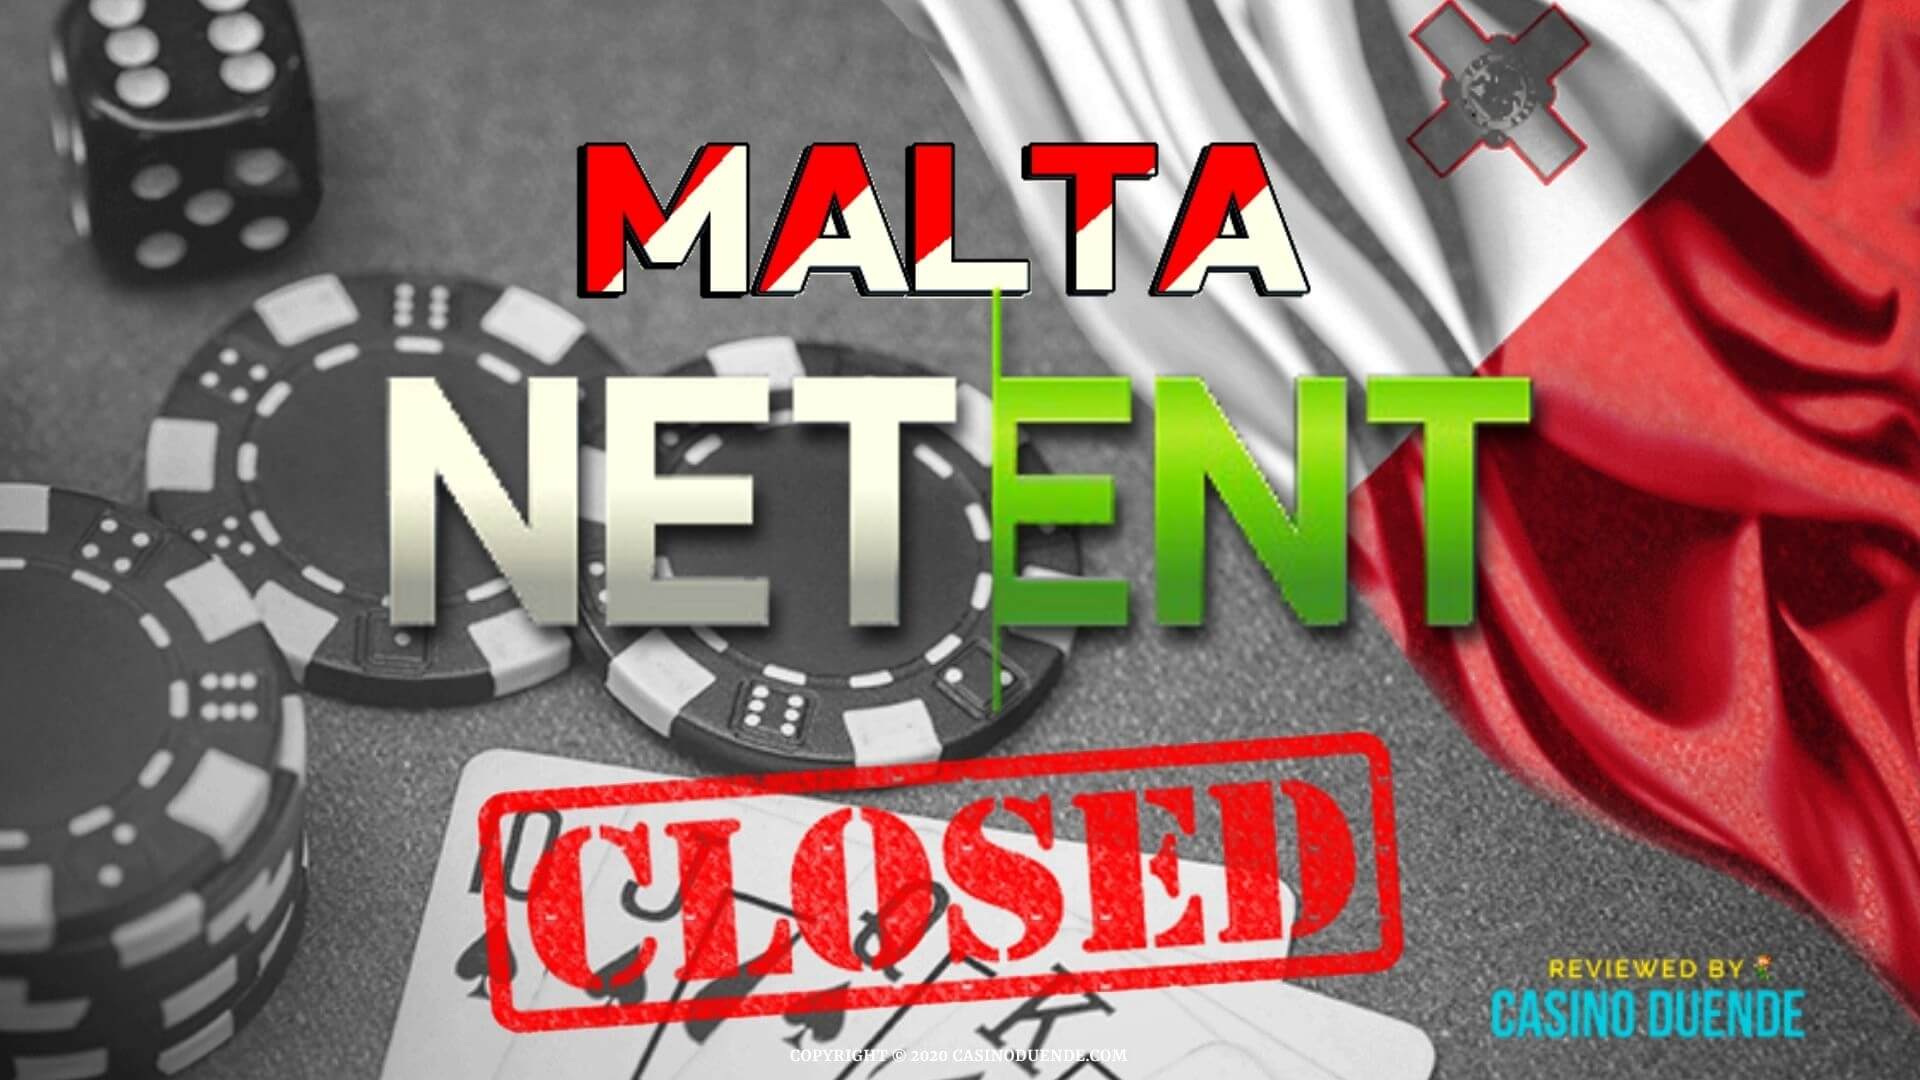 NetEnt Malta Closed